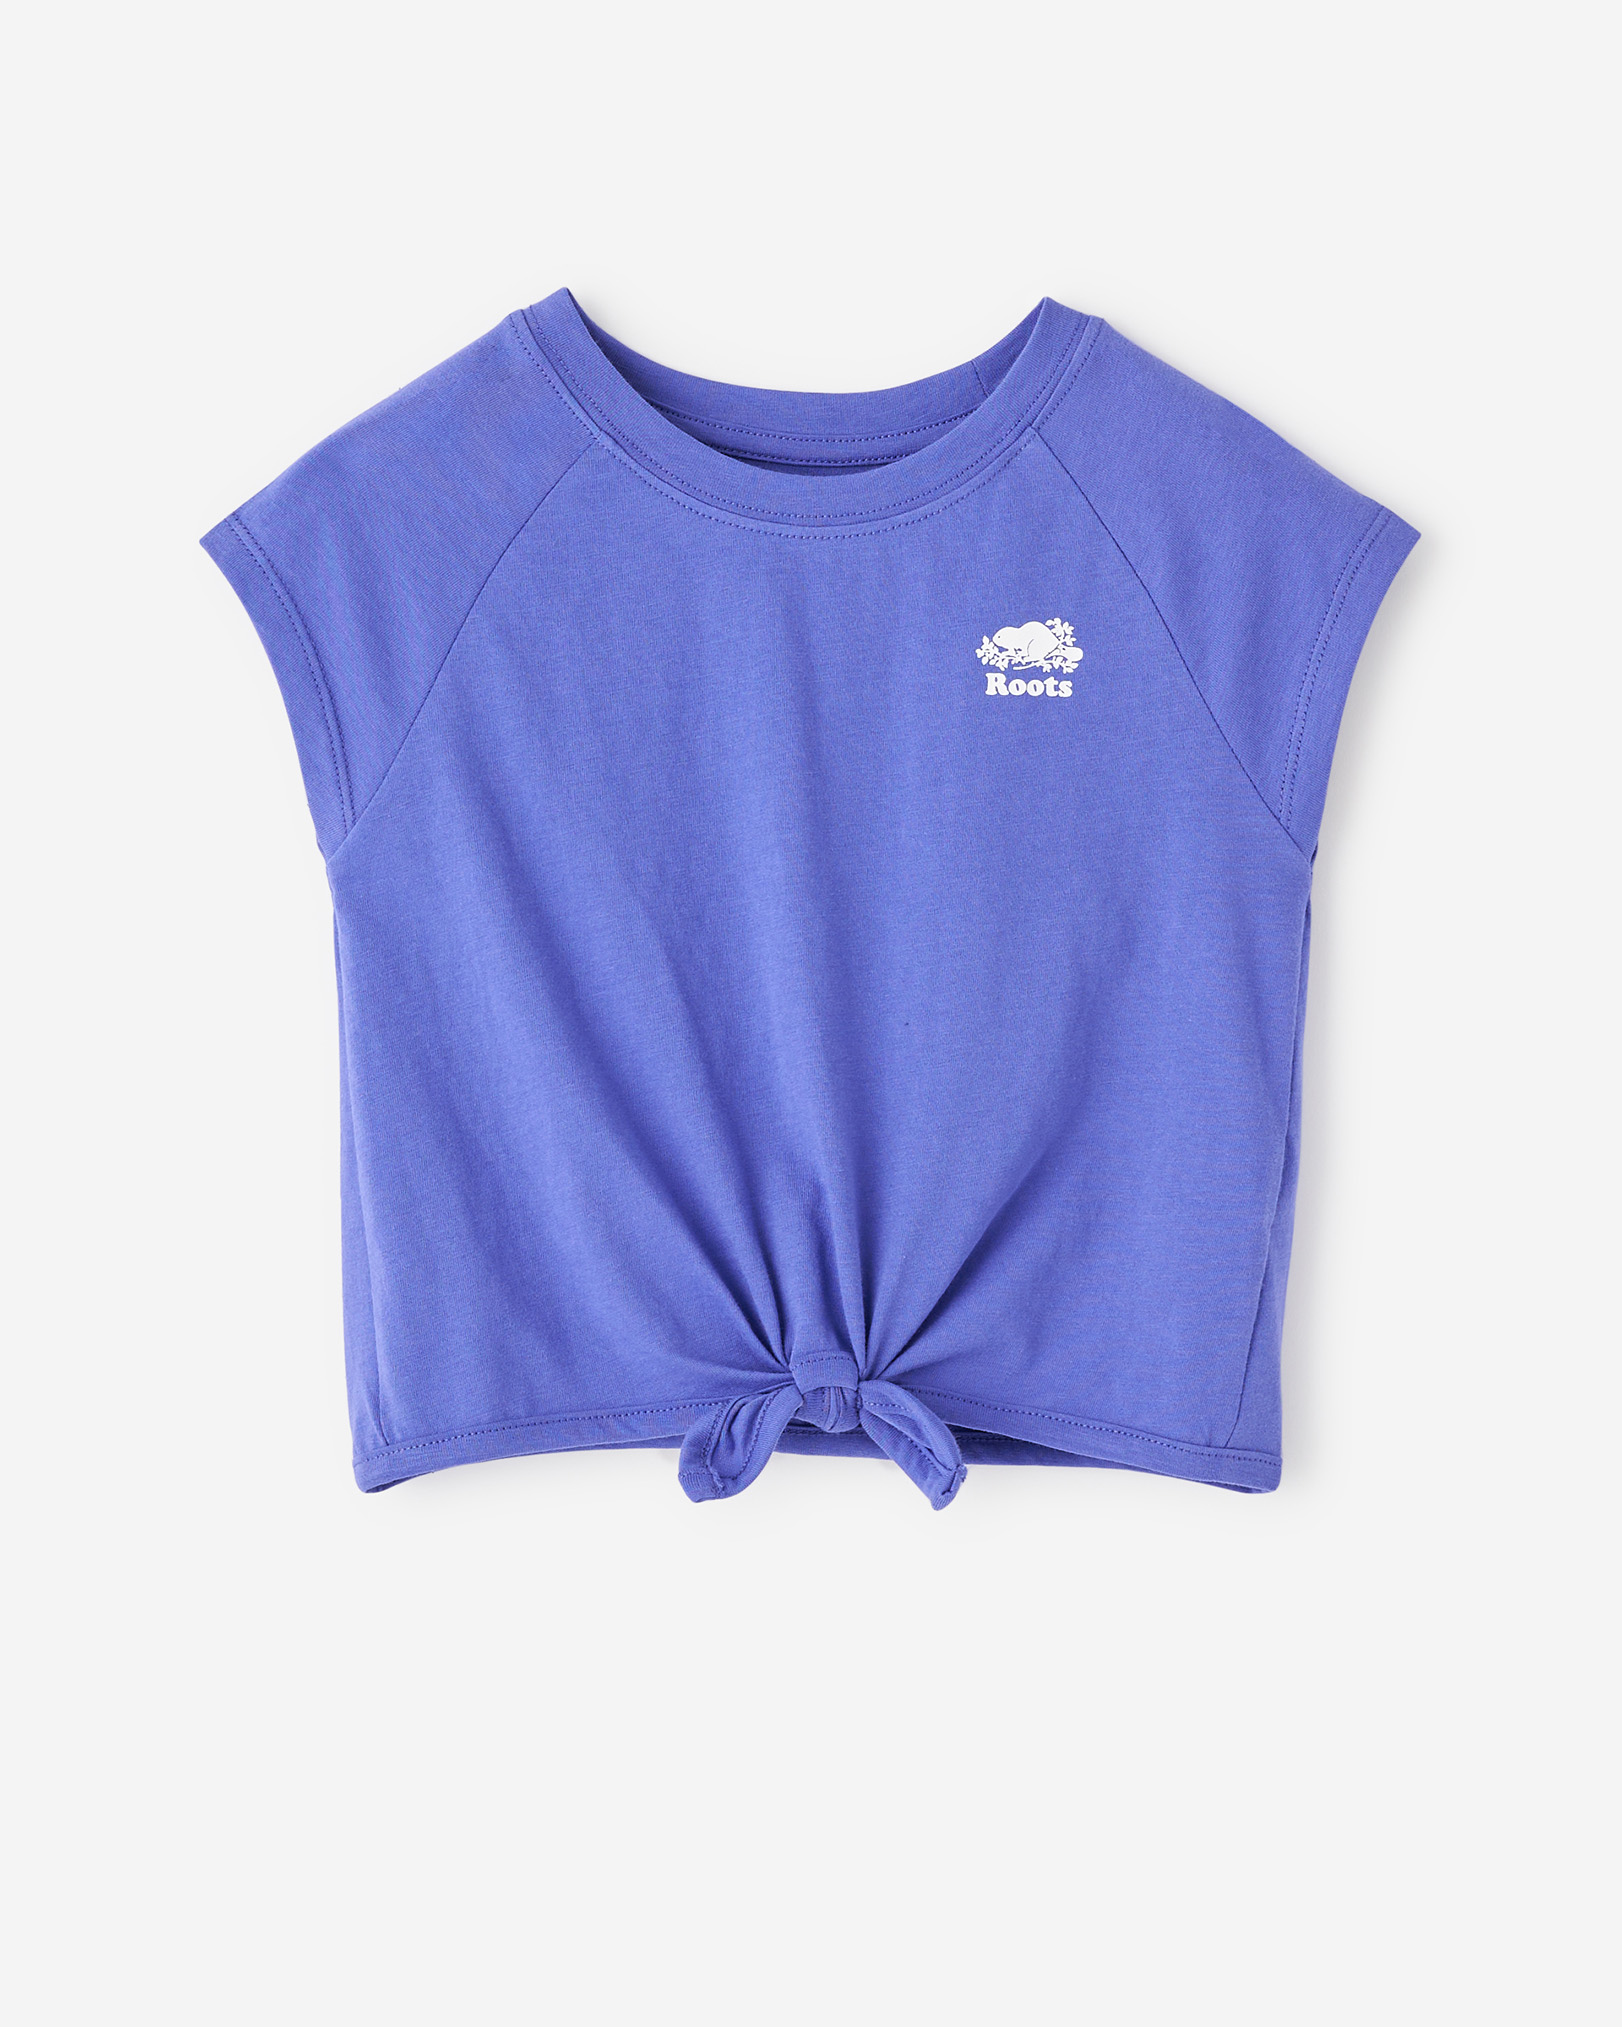 Roots Toddler Girl's Raglan Tie T-Shirt in Dahlia Blue